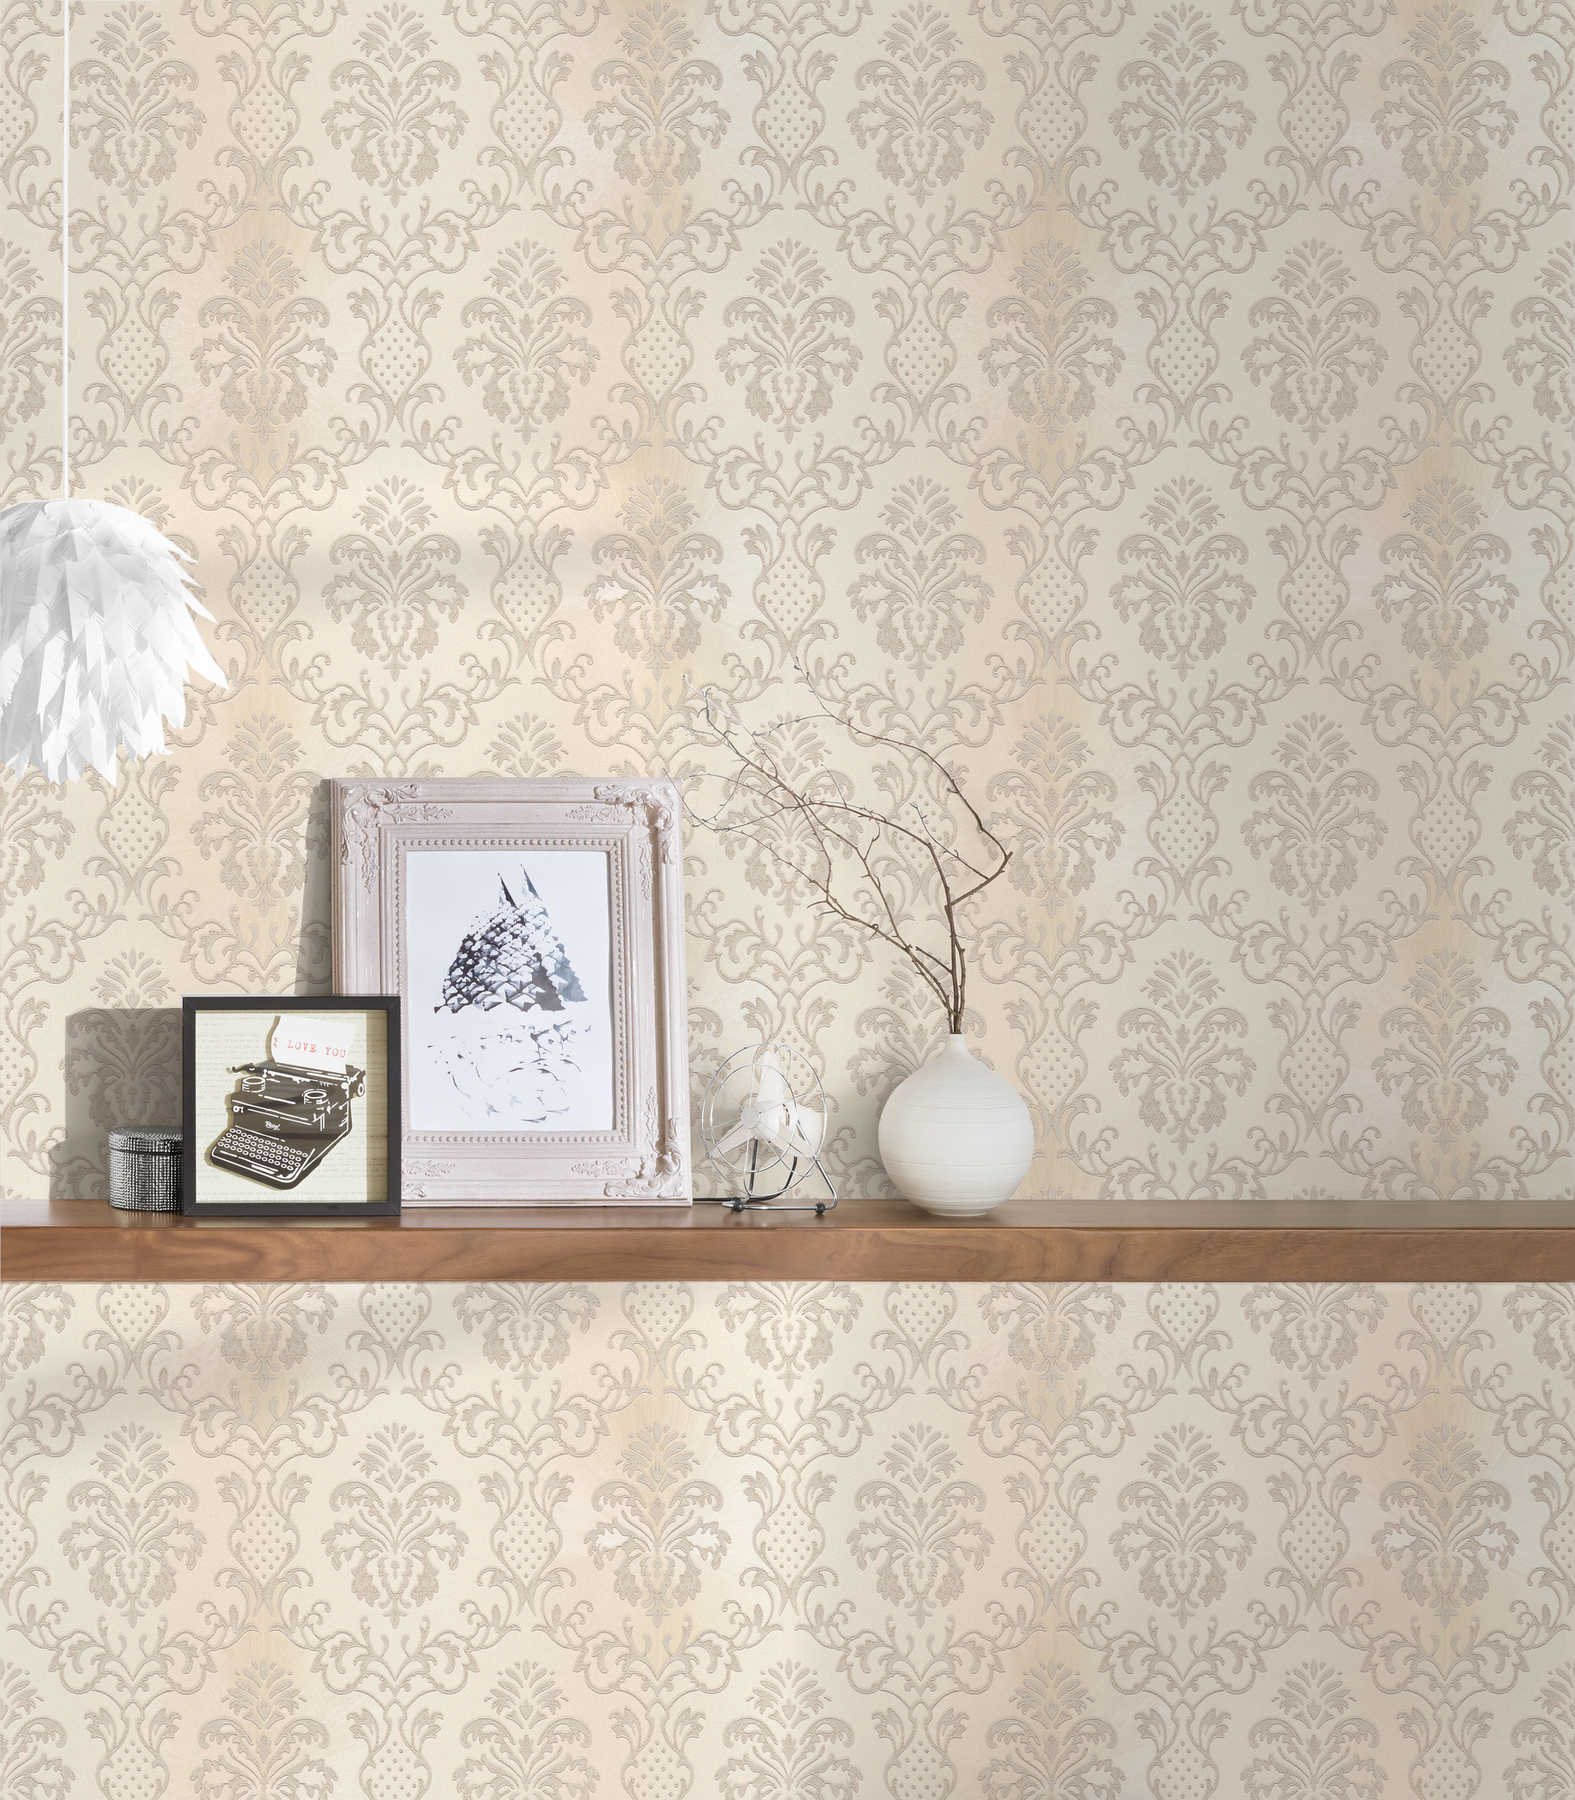             Ornament wallpaper Colonial Style - cream, grey
        